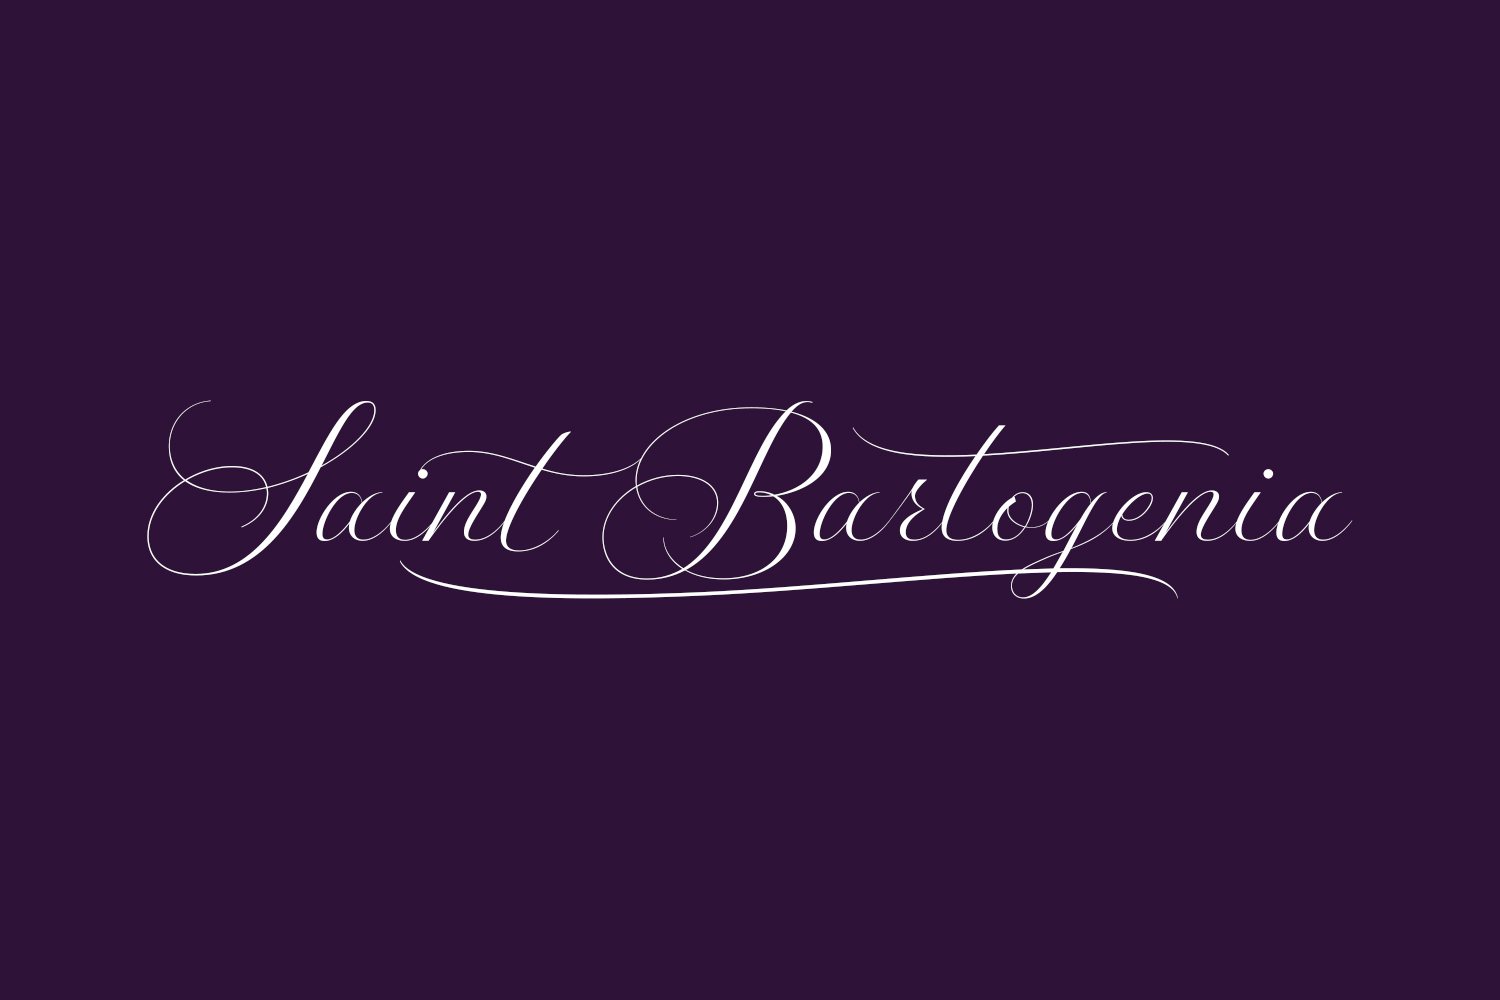 Free Saint Bartogenia Font